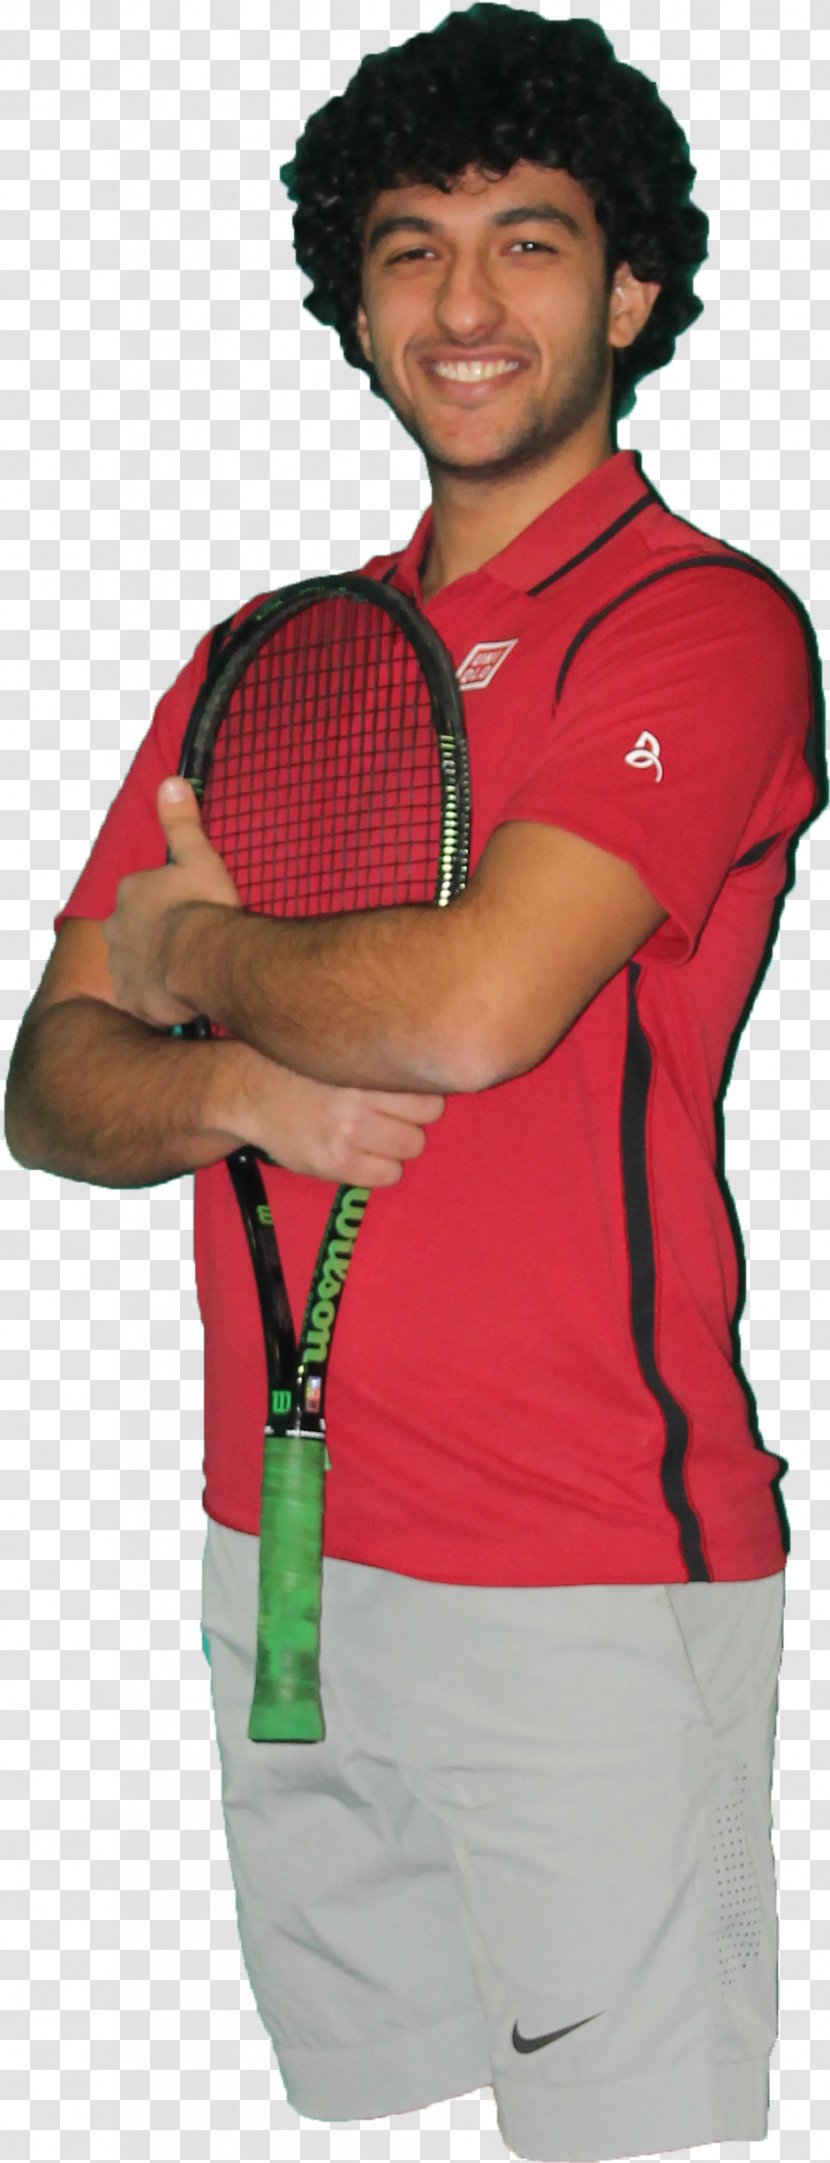 Middle East Technical University T-shirt Tennis Sleeve Arm - Novak Djokovic Transparent PNG